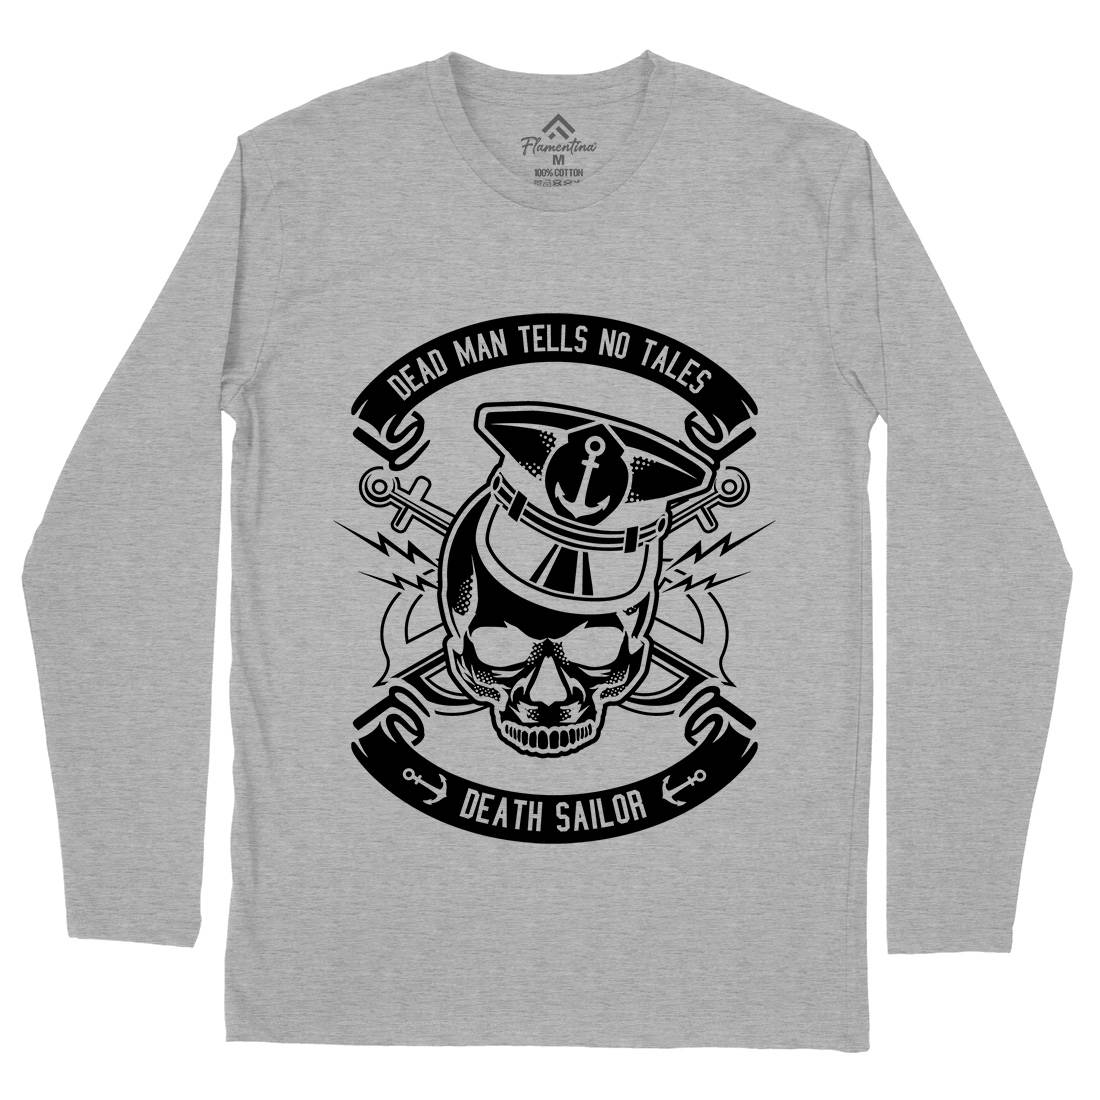 Death Sailor Mens Long Sleeve T-Shirt Navy B529